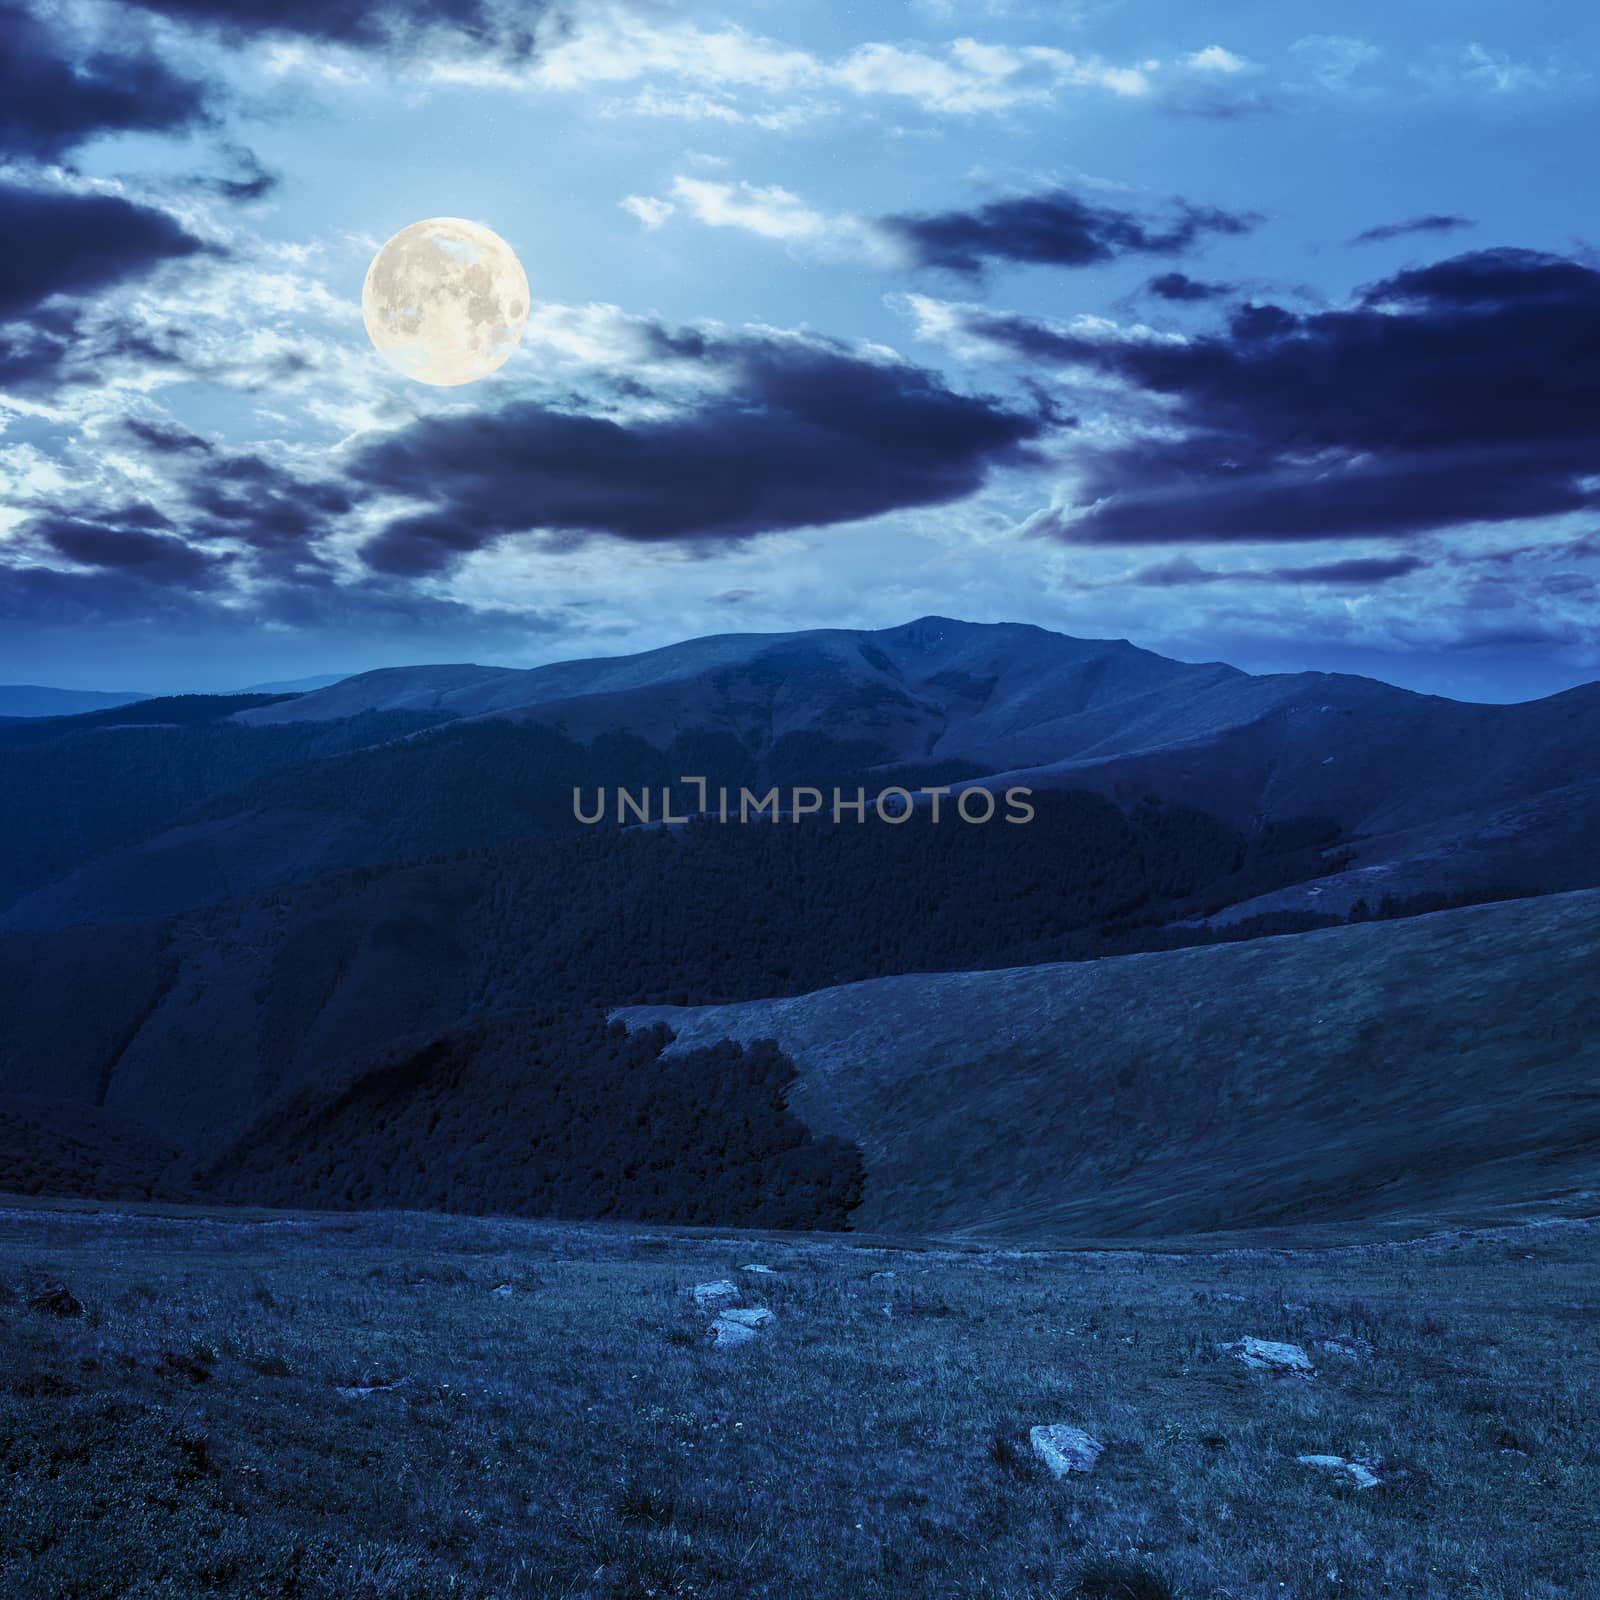 stones on the hillside of mountain range in full moon light by Pellinni